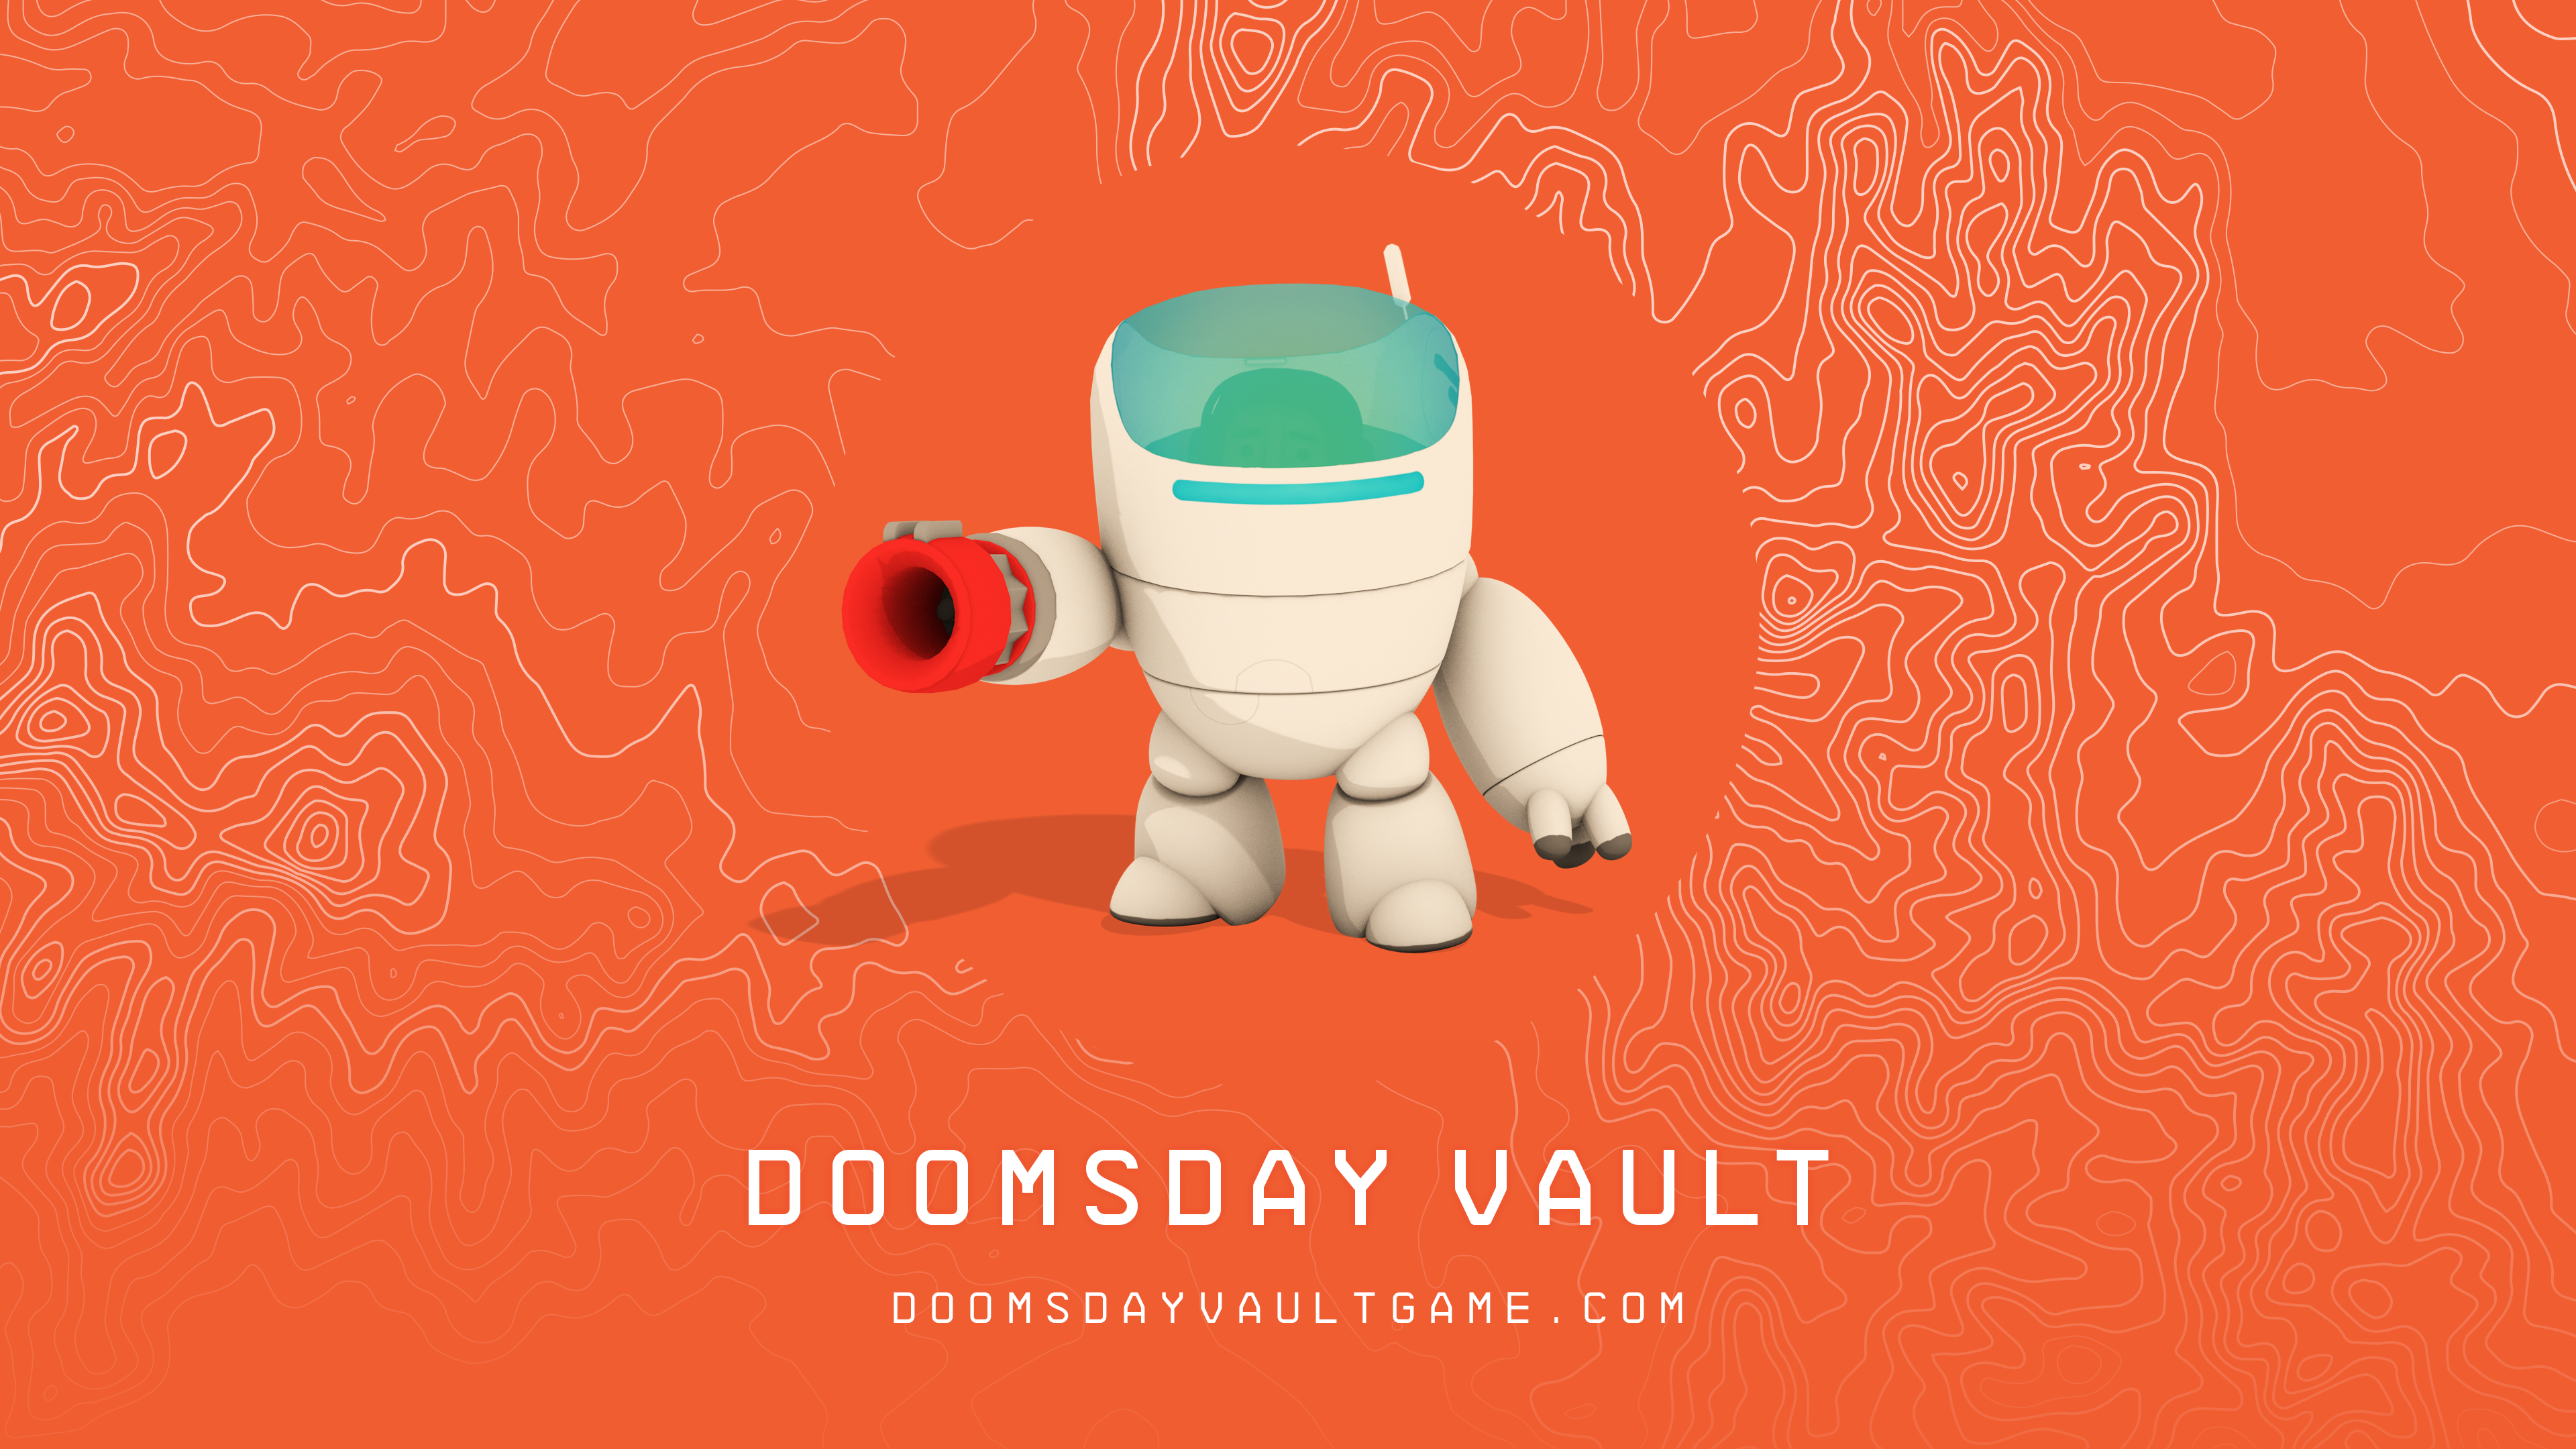 Doomsday_Vault_identity_pose_04.png